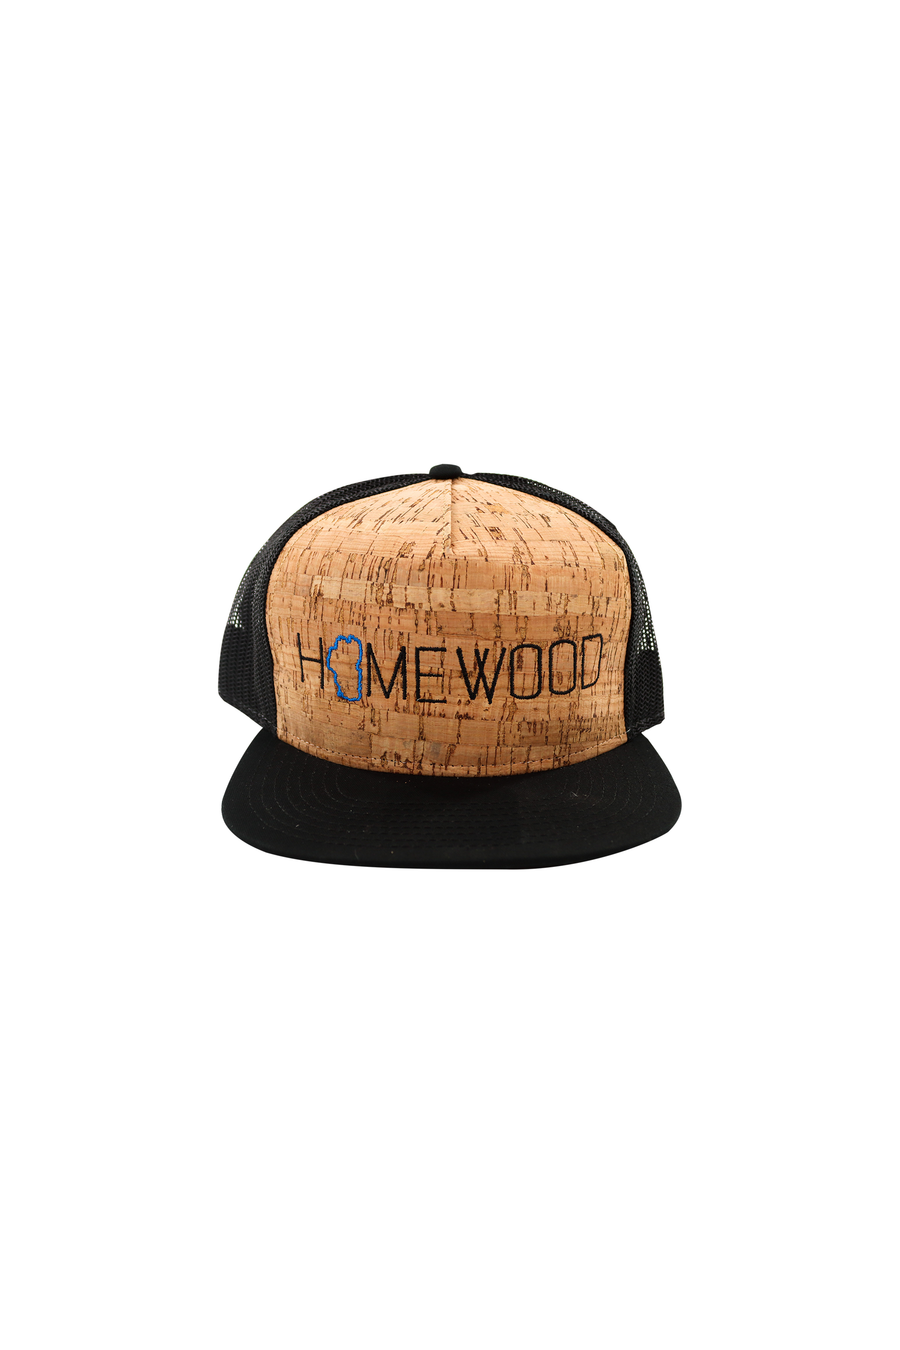 Homewood Cork Hat ( real cork )